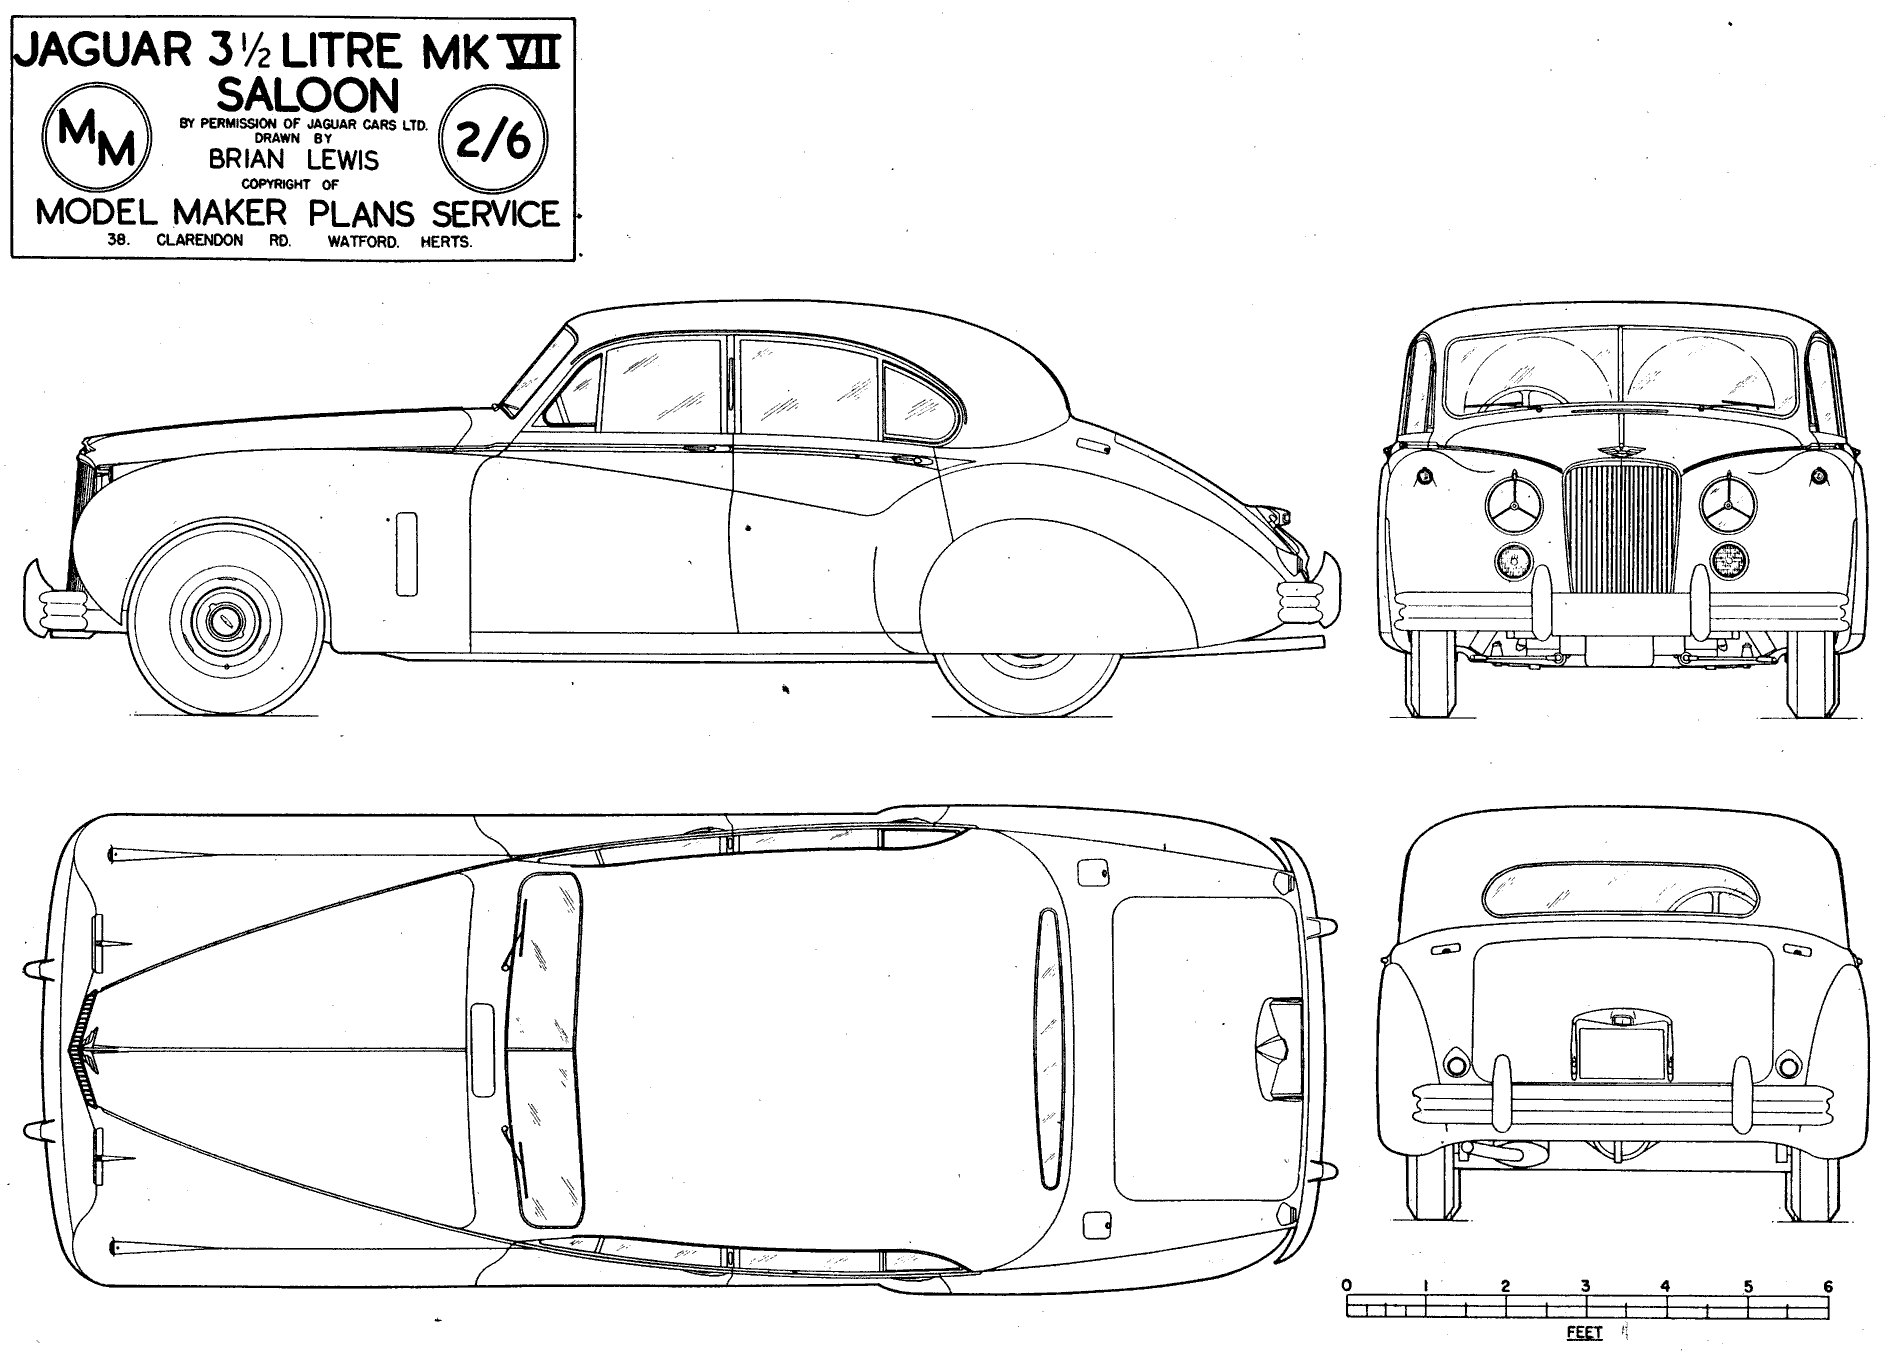 Jaguar Mark VII blueprint